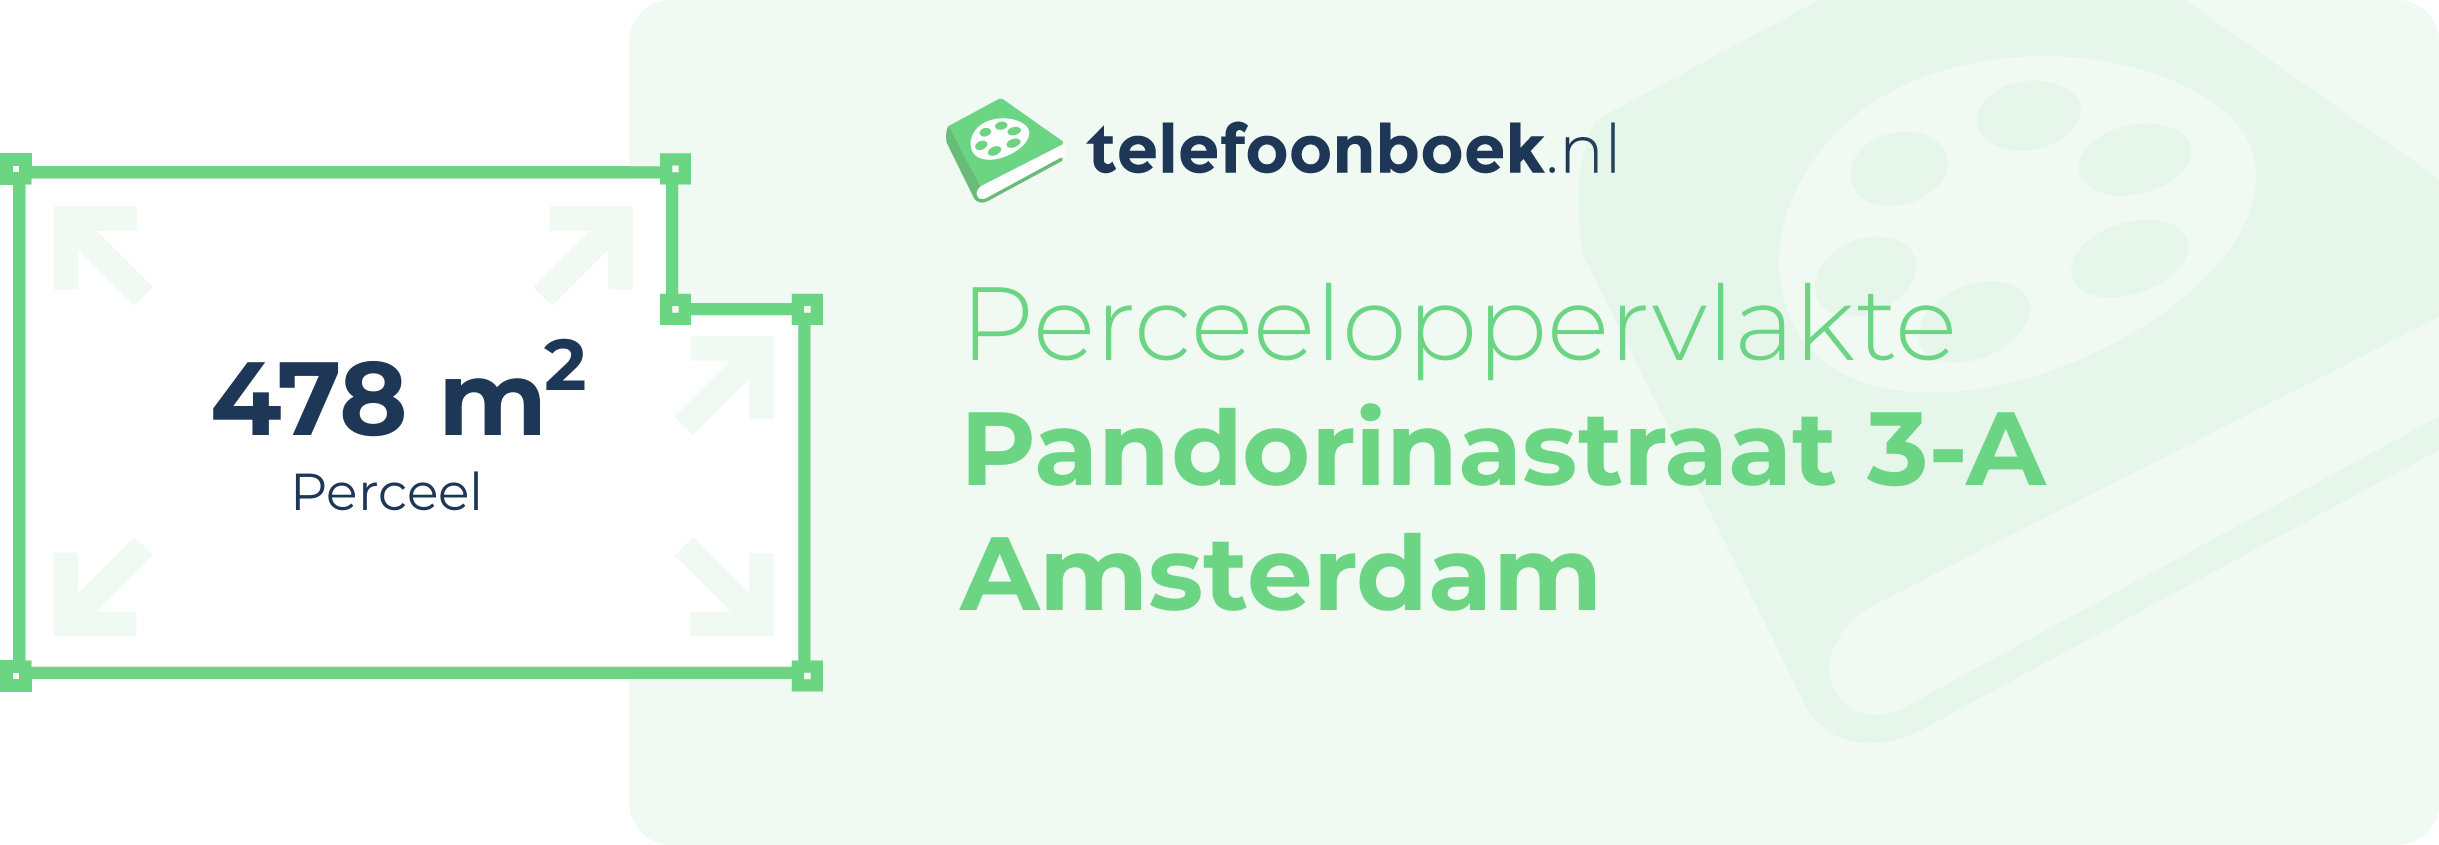 Perceeloppervlakte Pandorinastraat 3-A Amsterdam